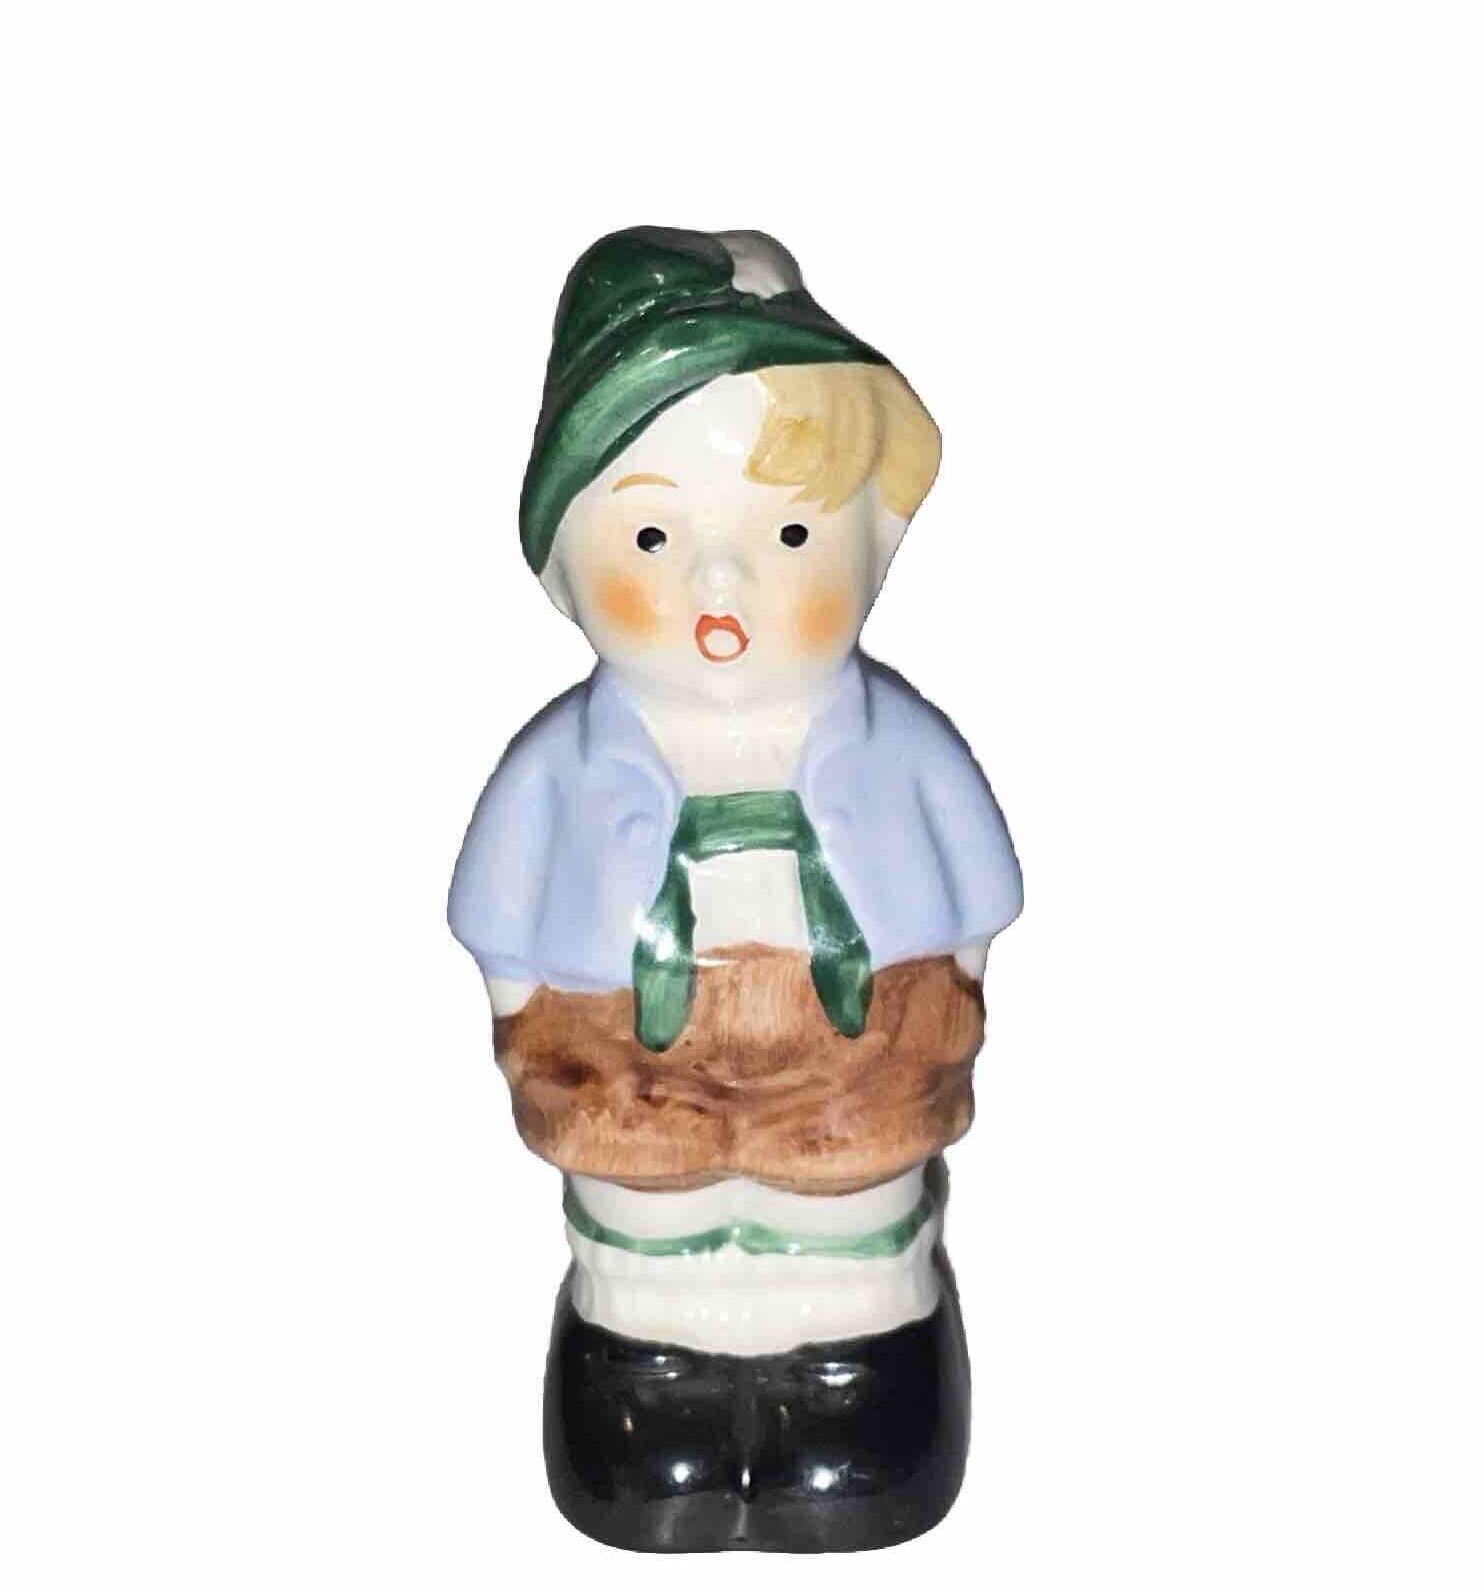 Vintage Goebel Bavarian Boy Ceramic Figurein West Germany Marked on Bottom